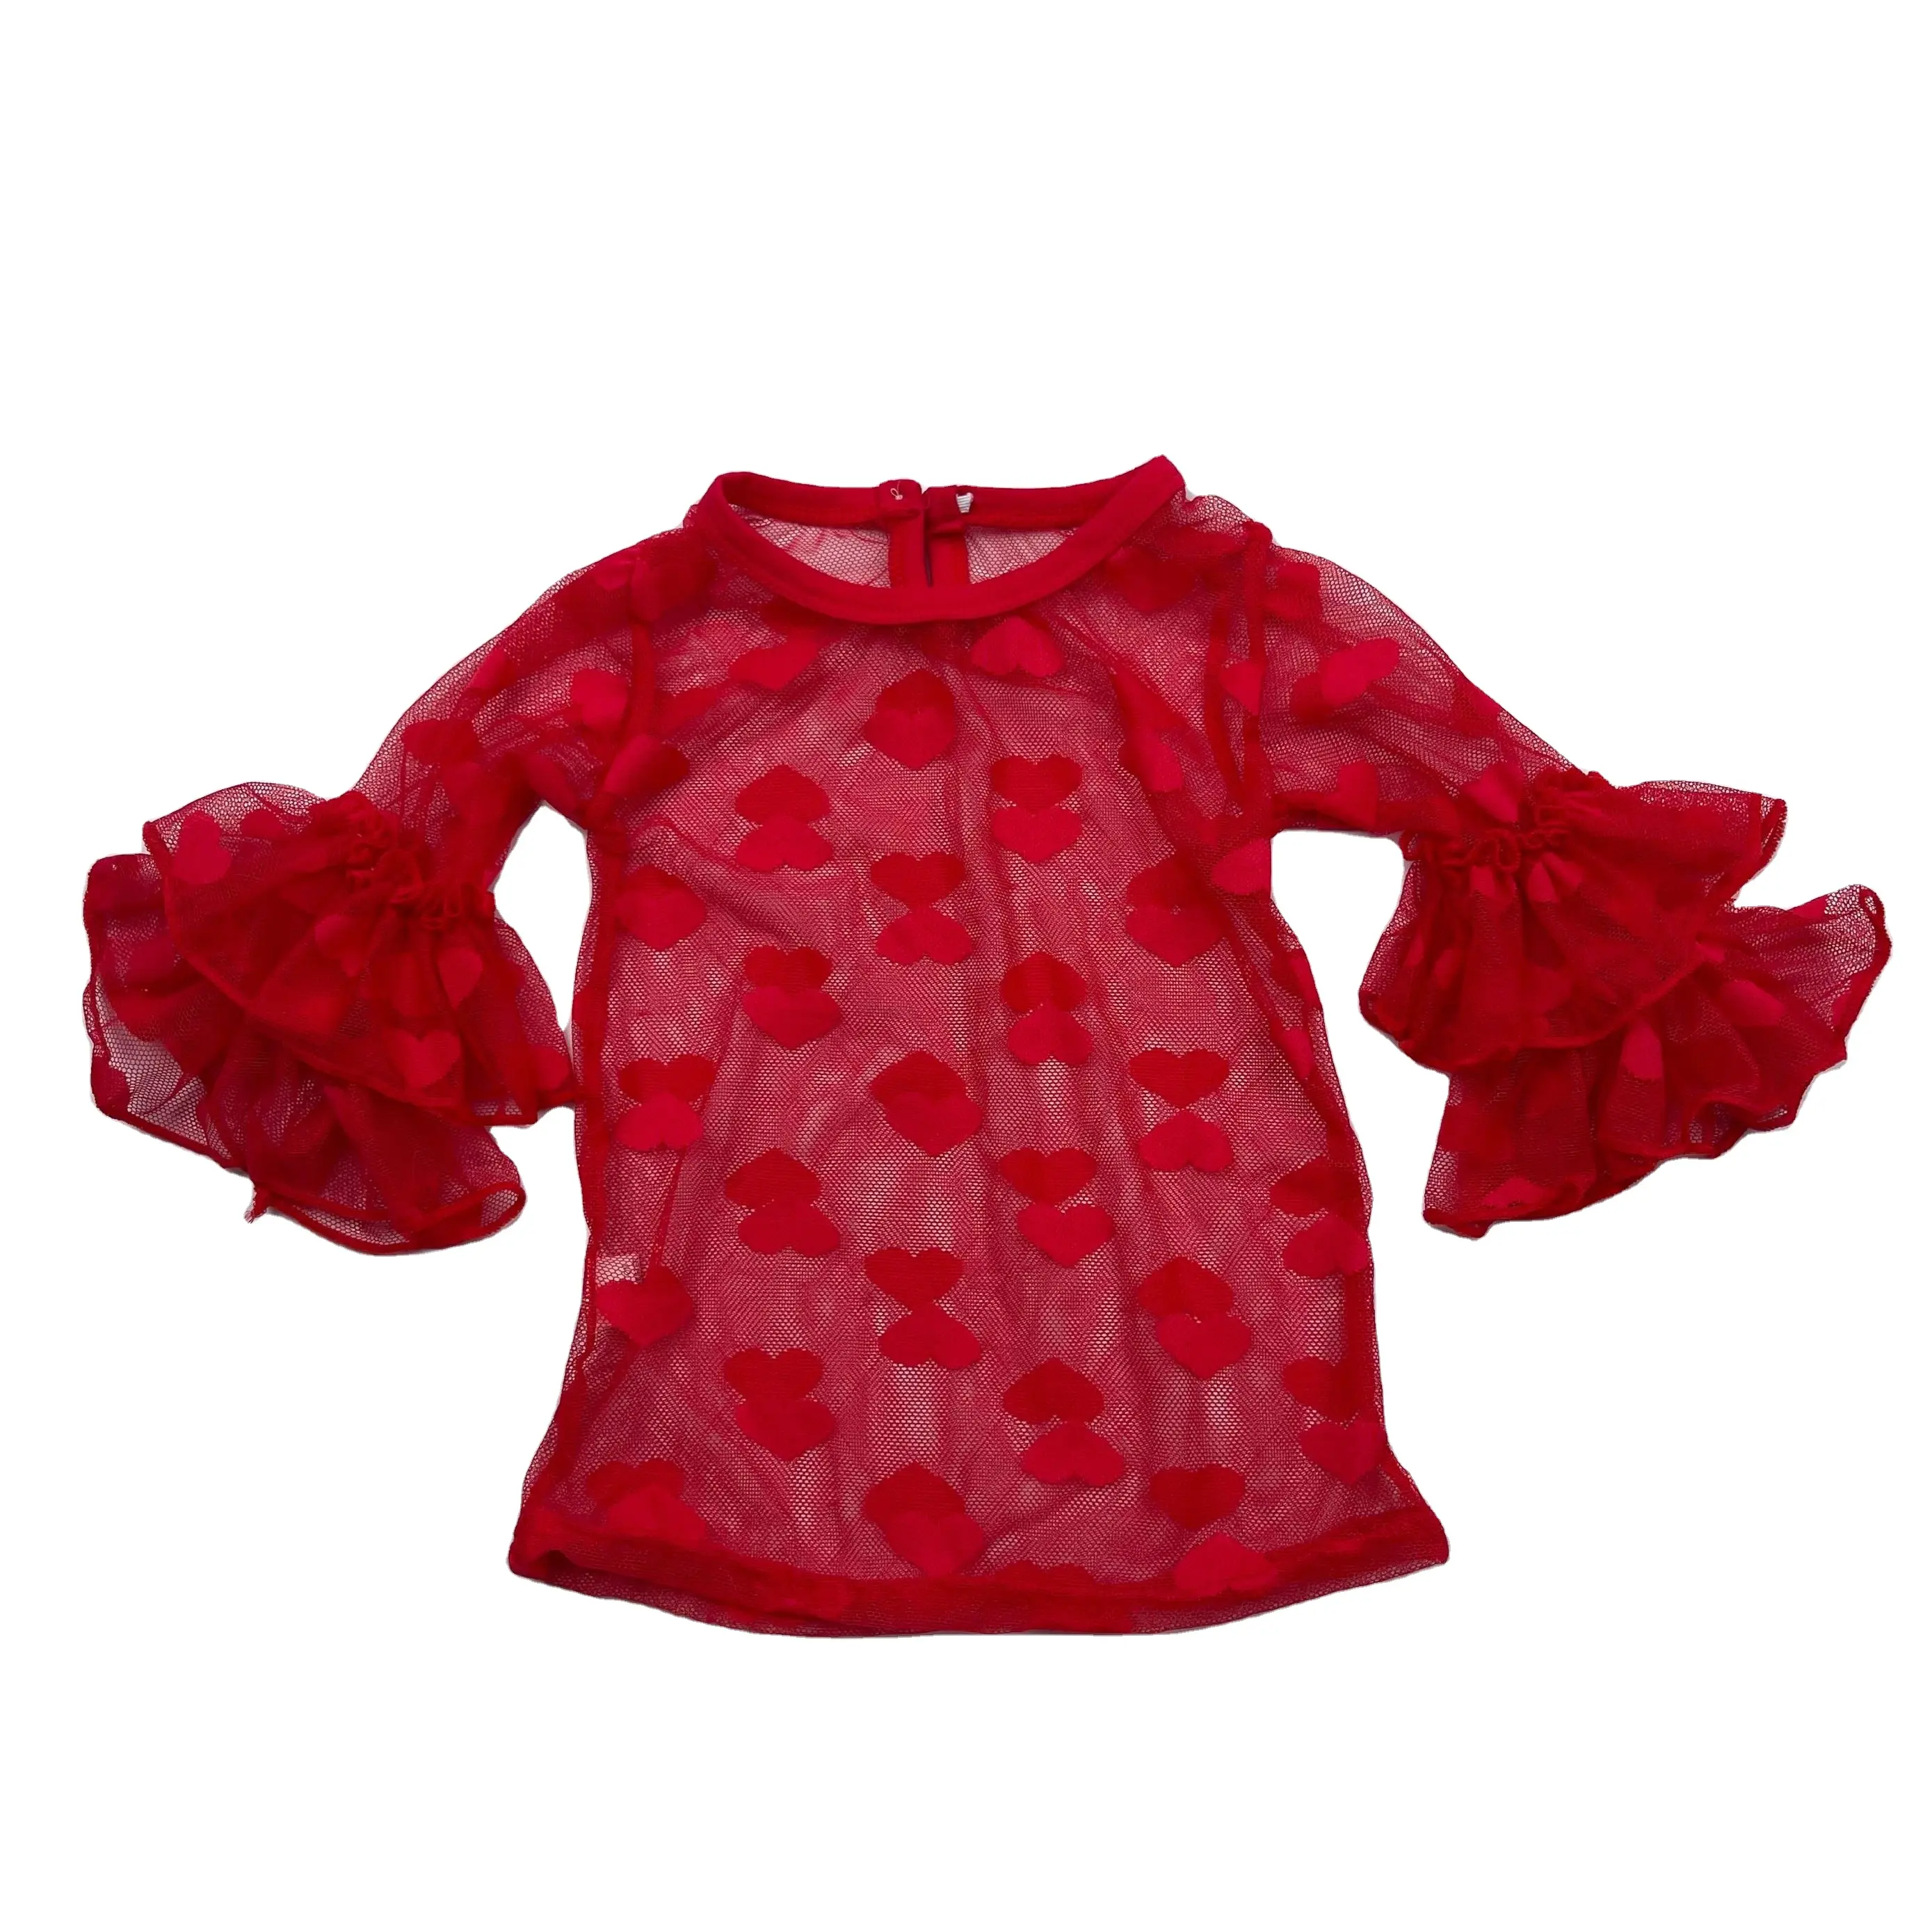 LZ2022 Wholesale Baby Girls Fashion lace tshirt Top Shirt Baby Girls Bell Bottom Sleeve Lace TShirt Kids heart Base top